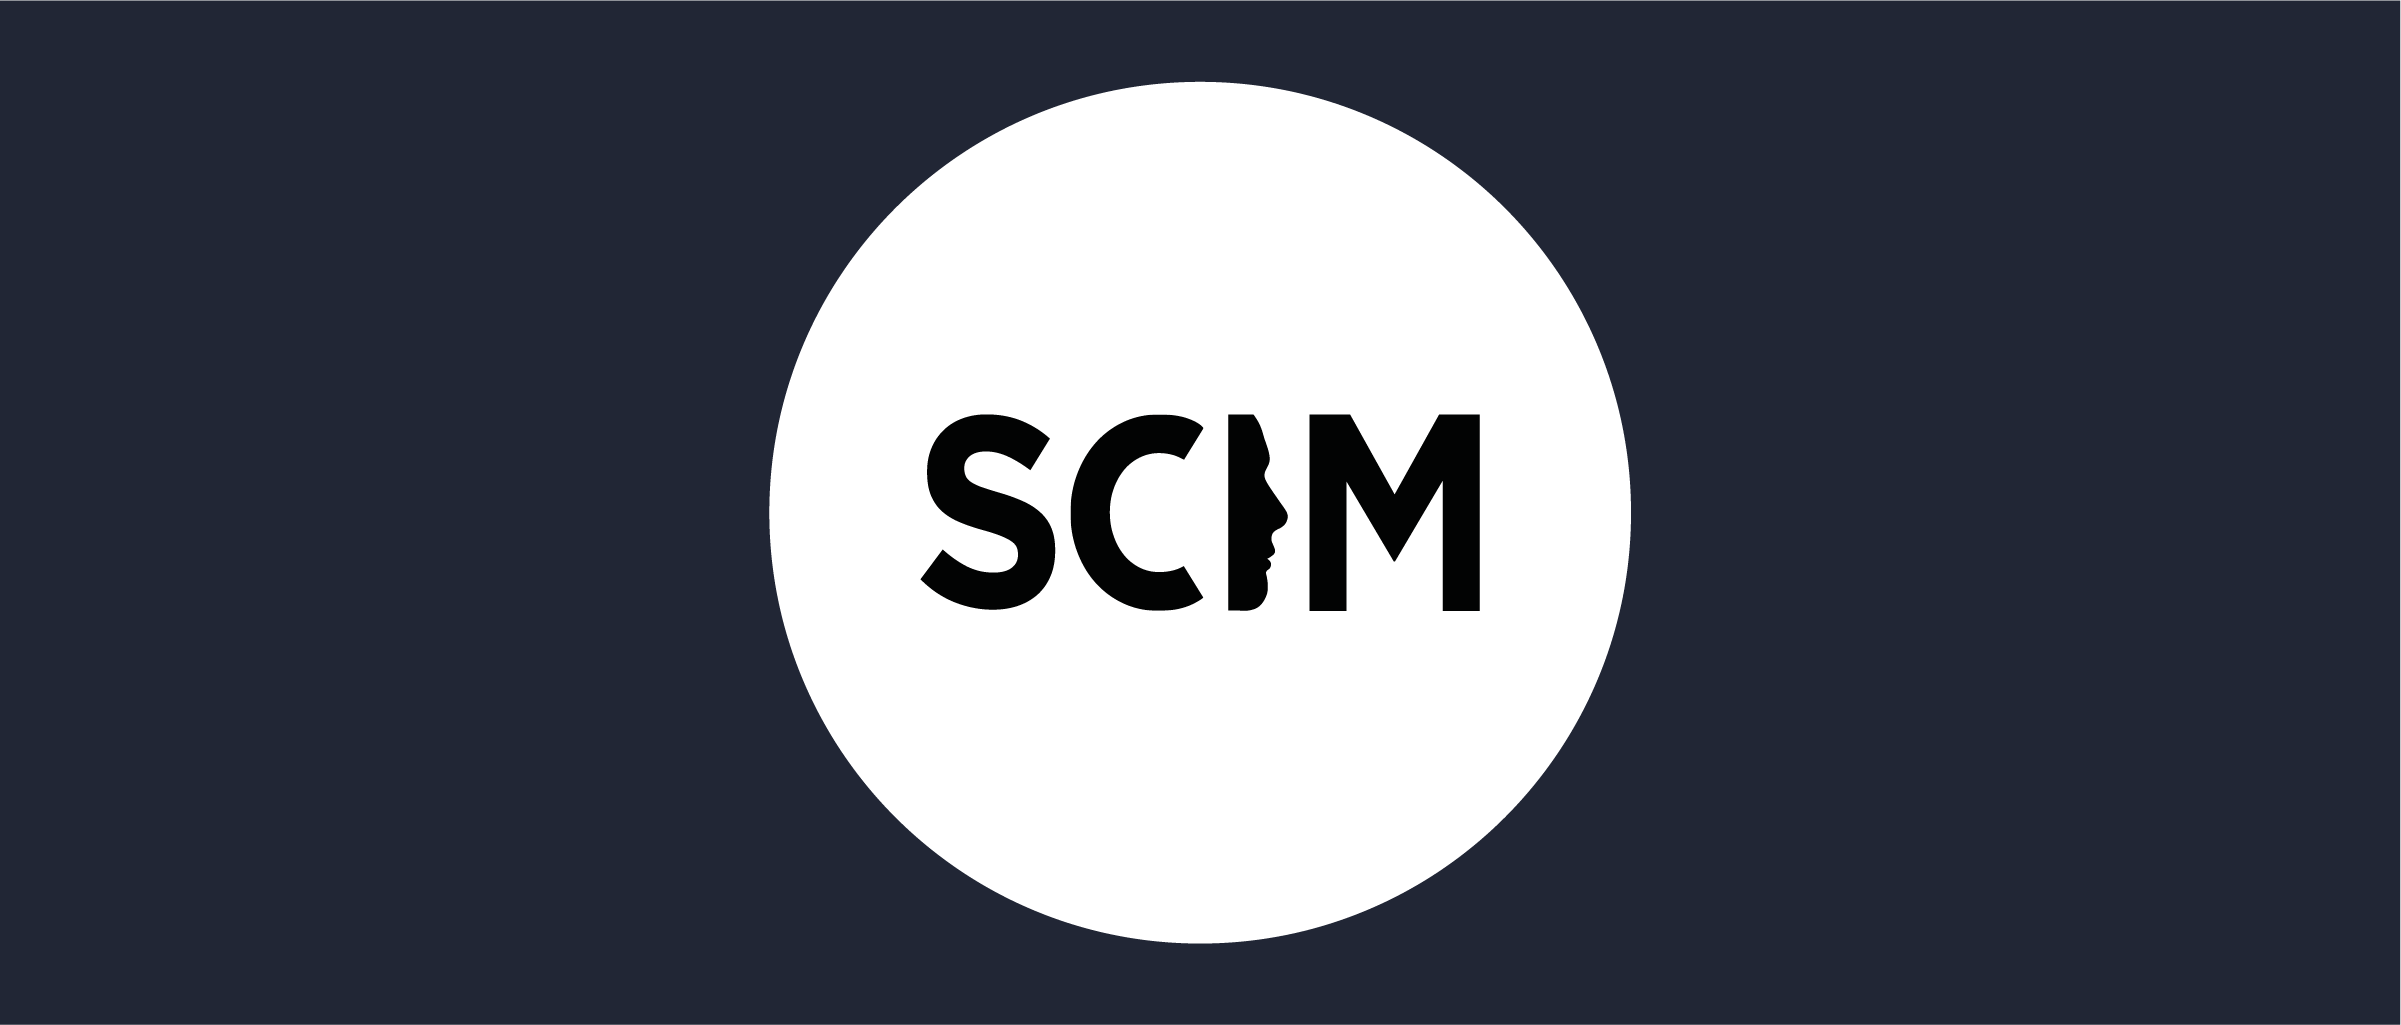 User Management with SCIM